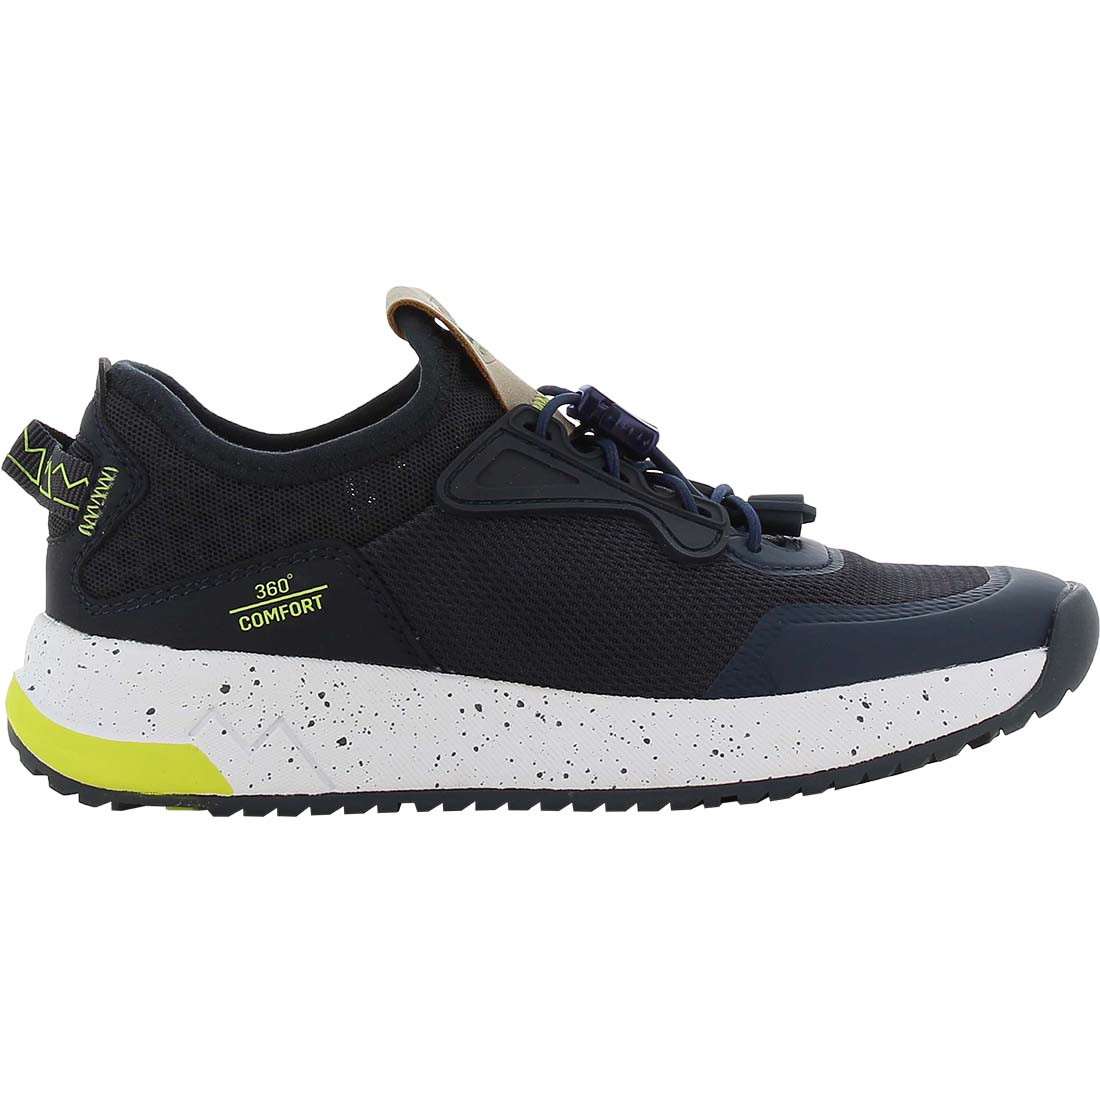 Adidasi pentru copii LOGAN JR - Incaltaminte de protectie | Bocanci, Pantofi, Sandale, Cizme